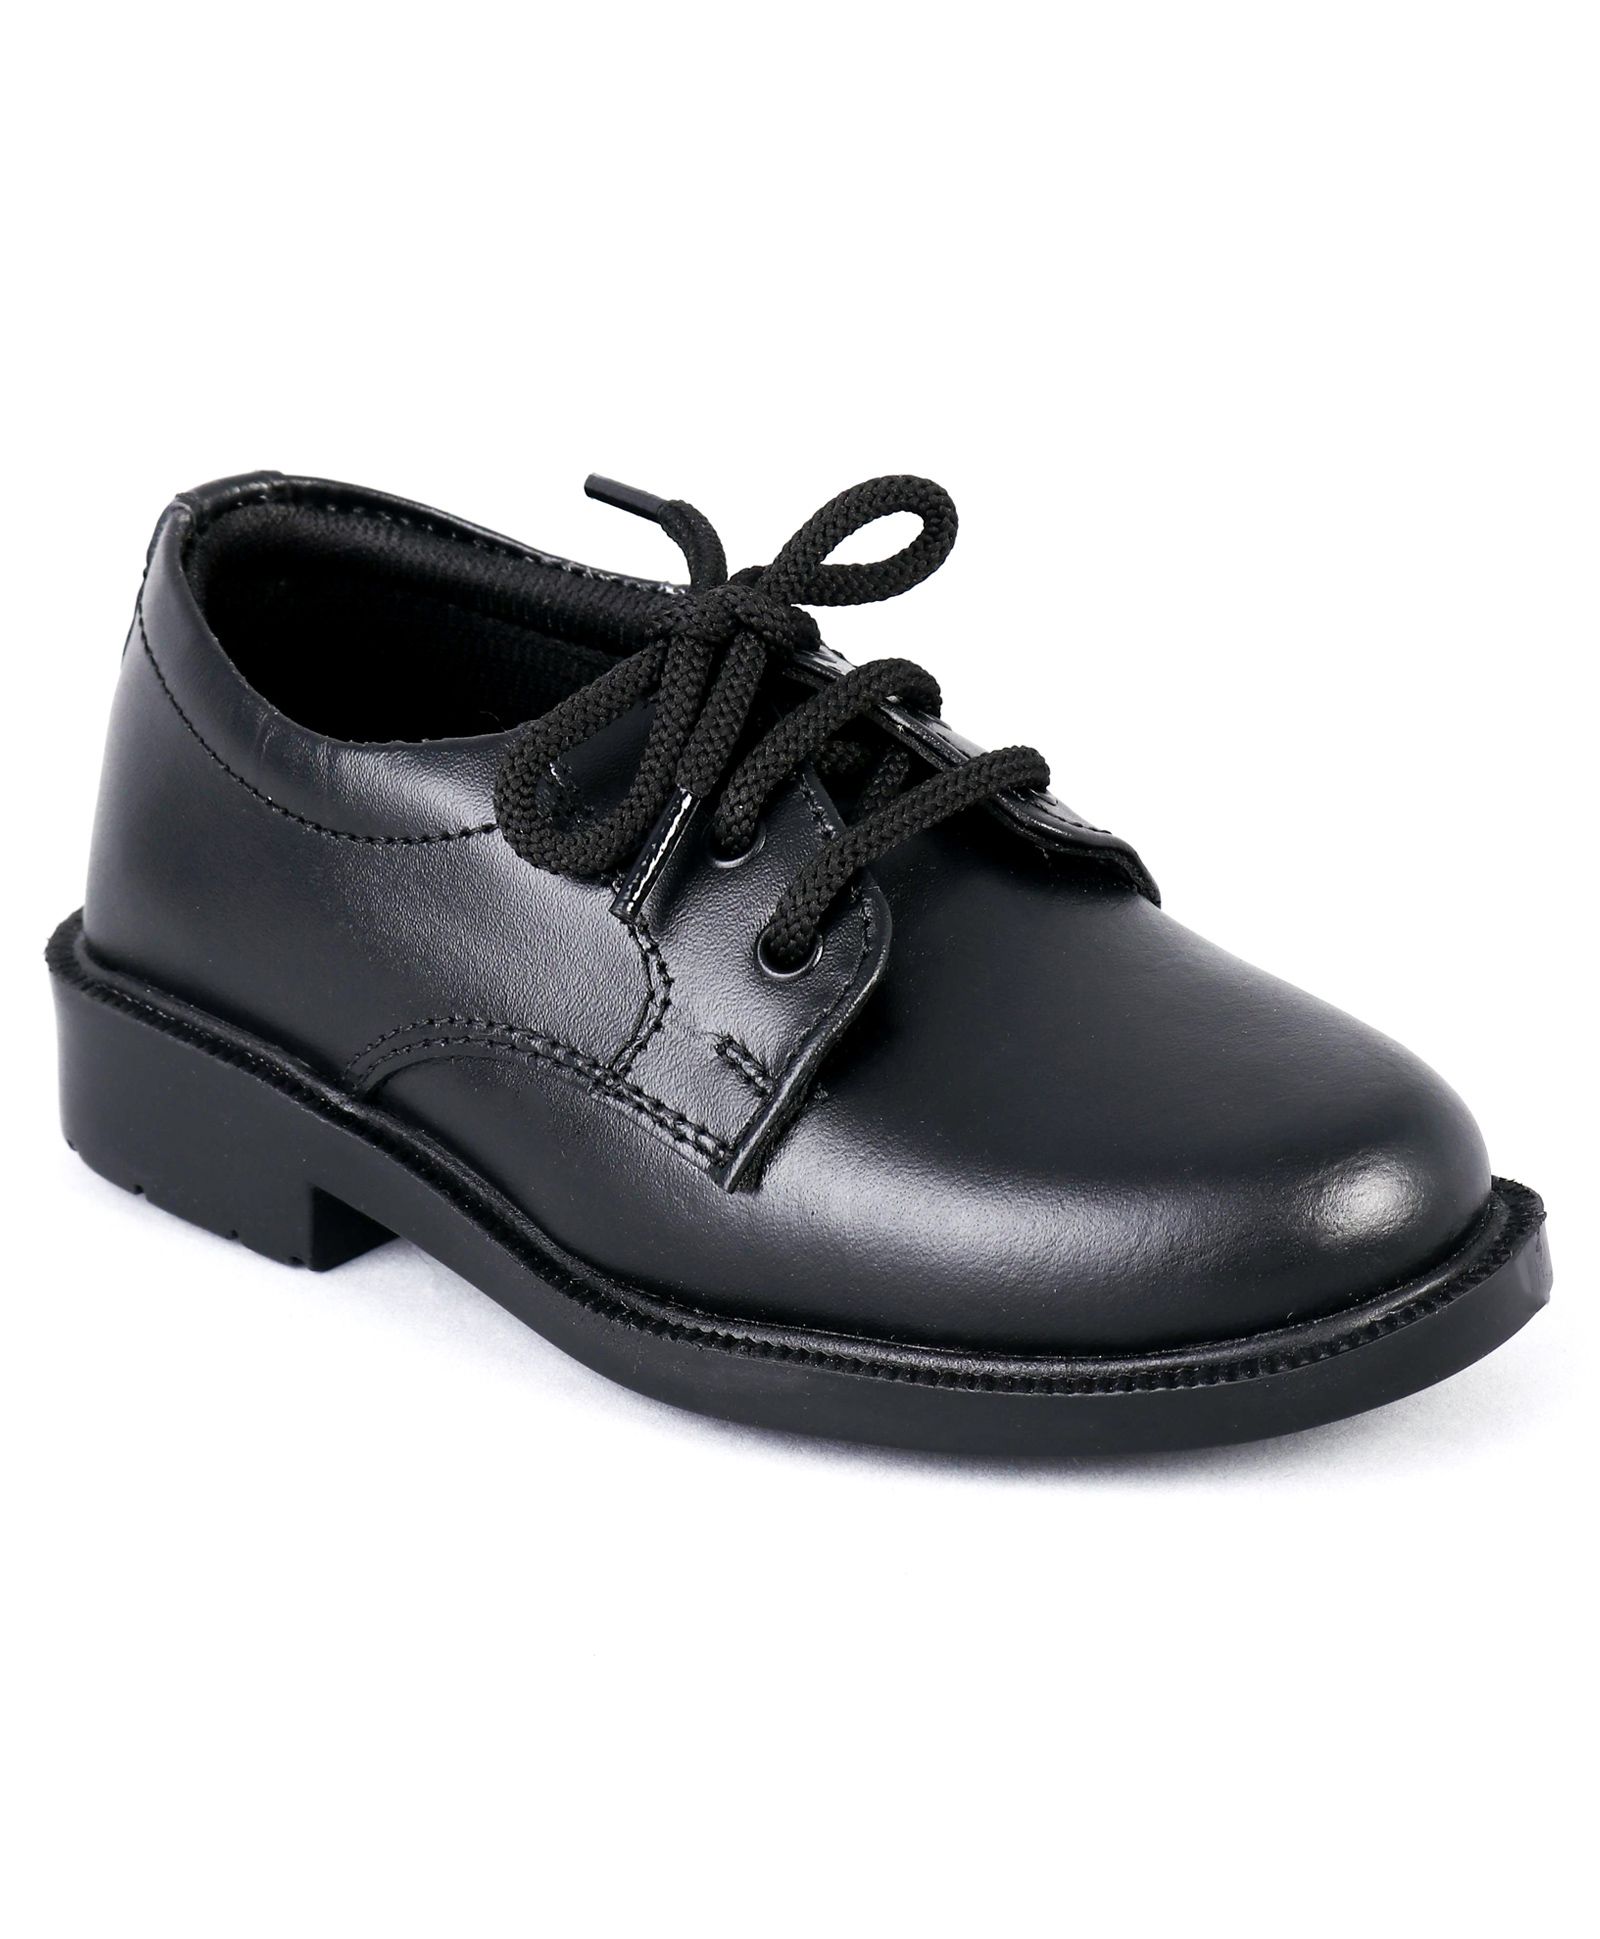 Prefect School Shoes- Buy Online in 